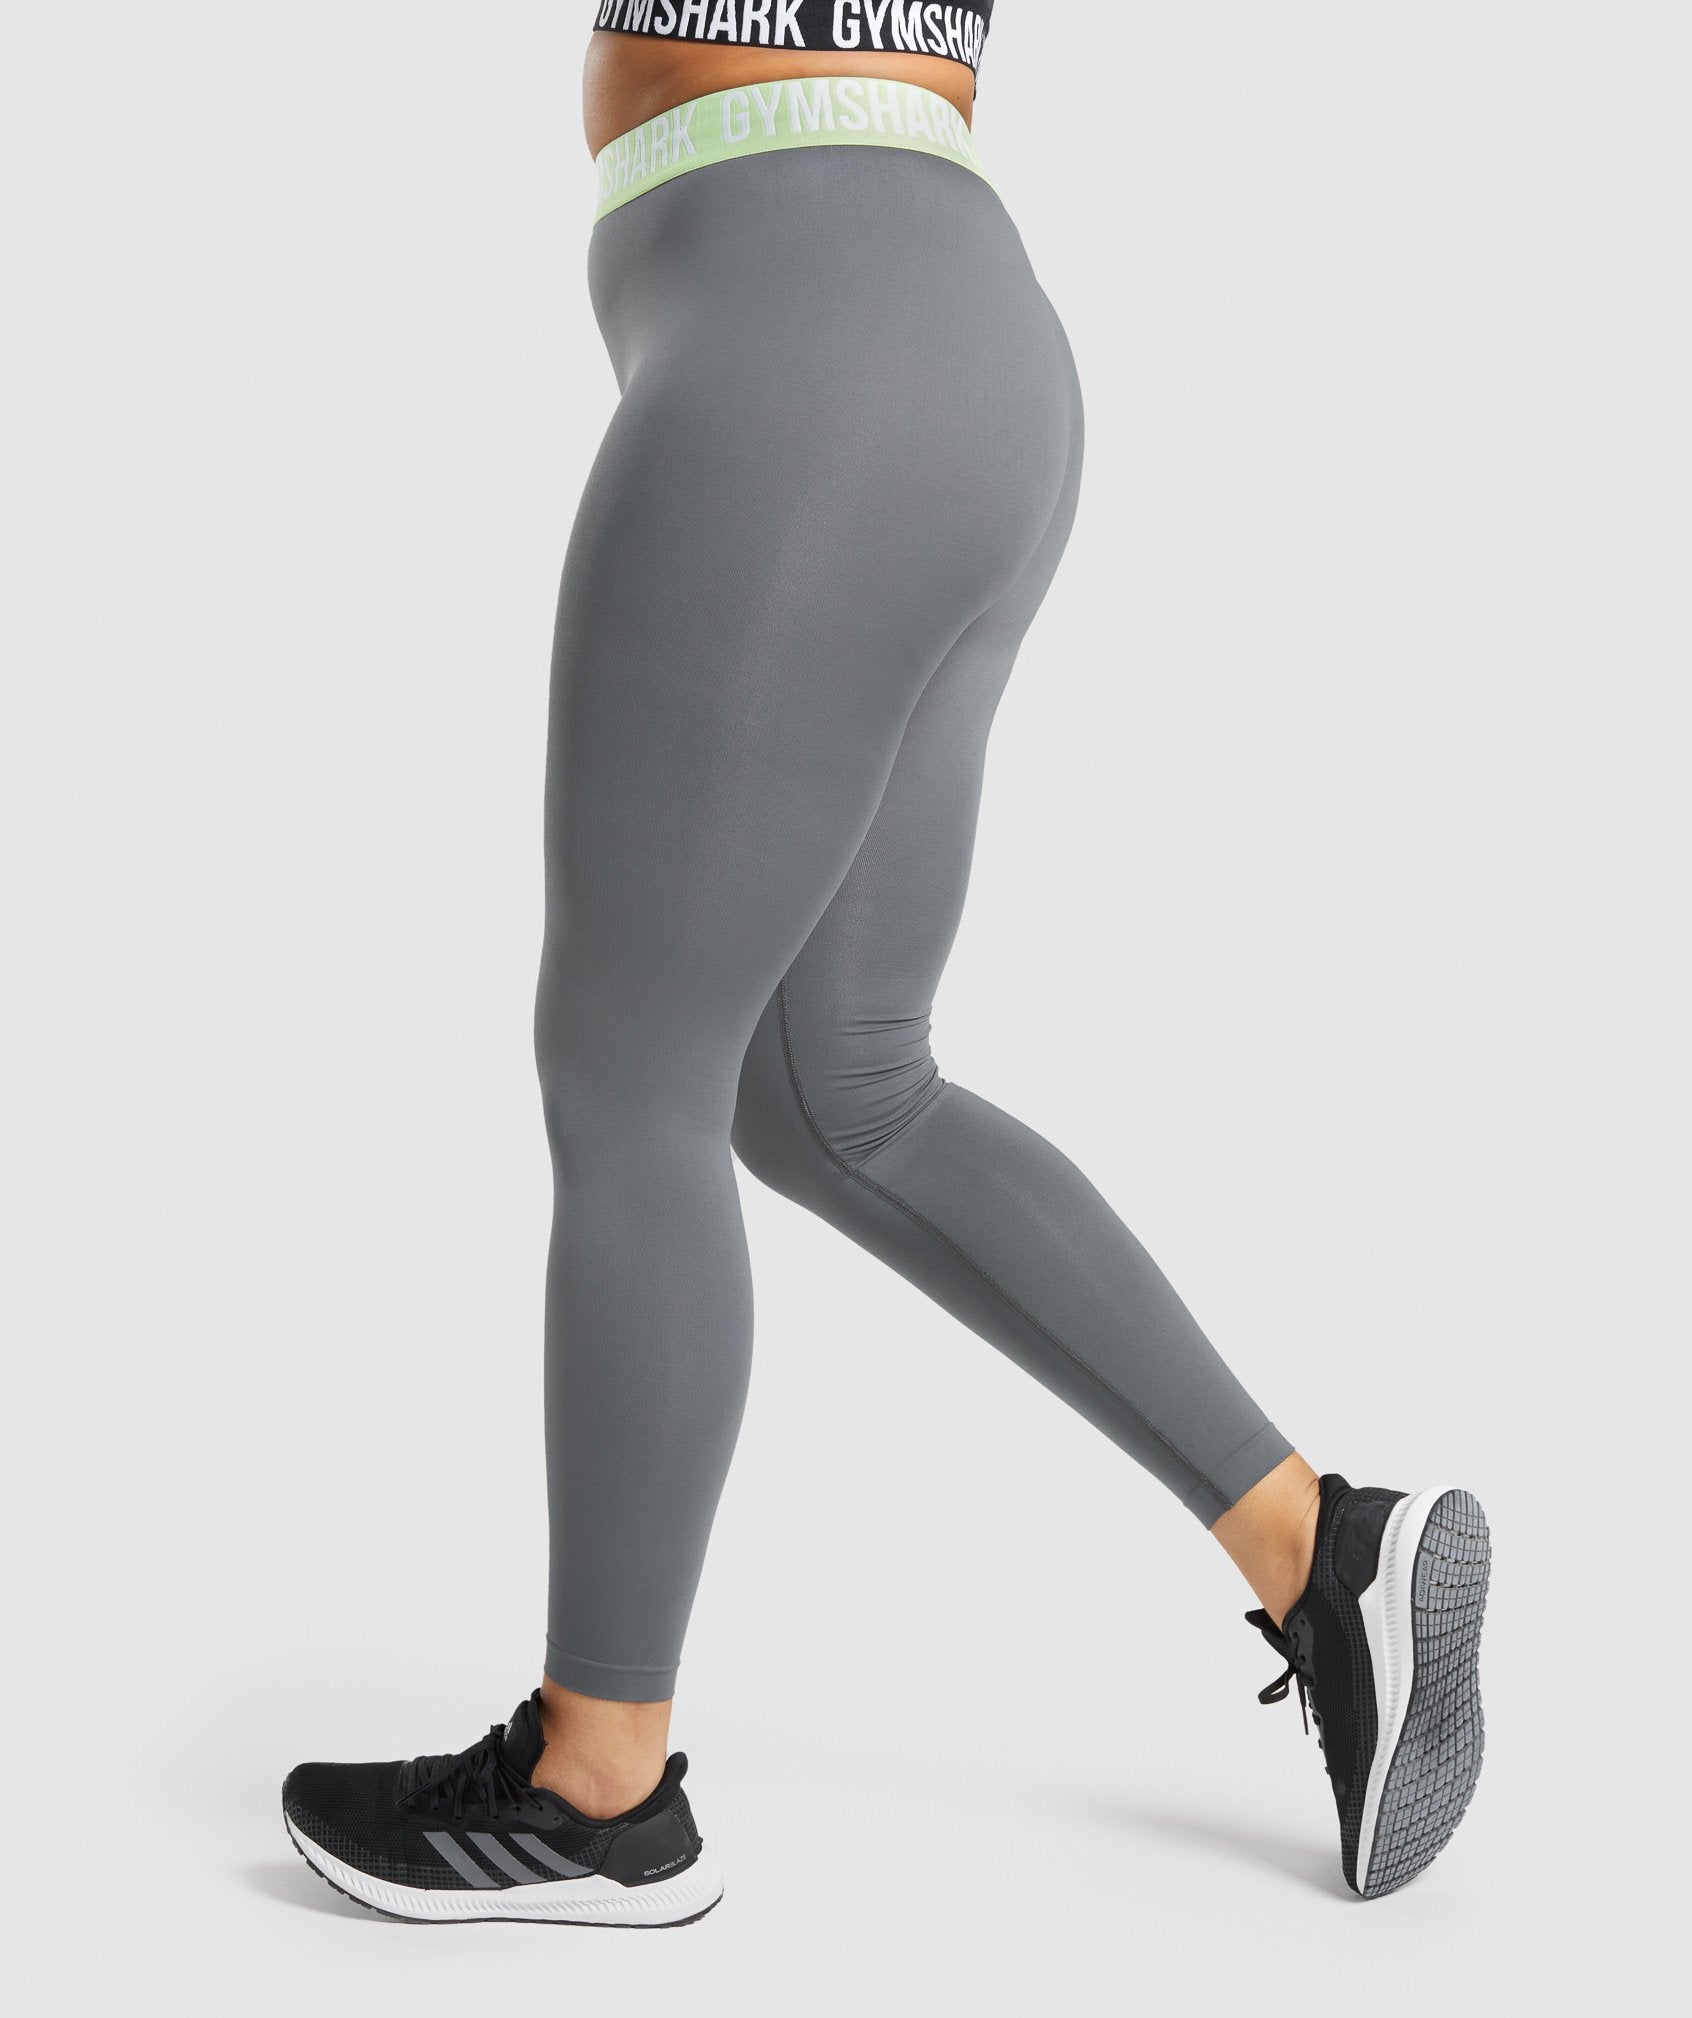 Gymshark Fleur Texture Leggings Small Grey Thermal Warm Yoga Workout Legging